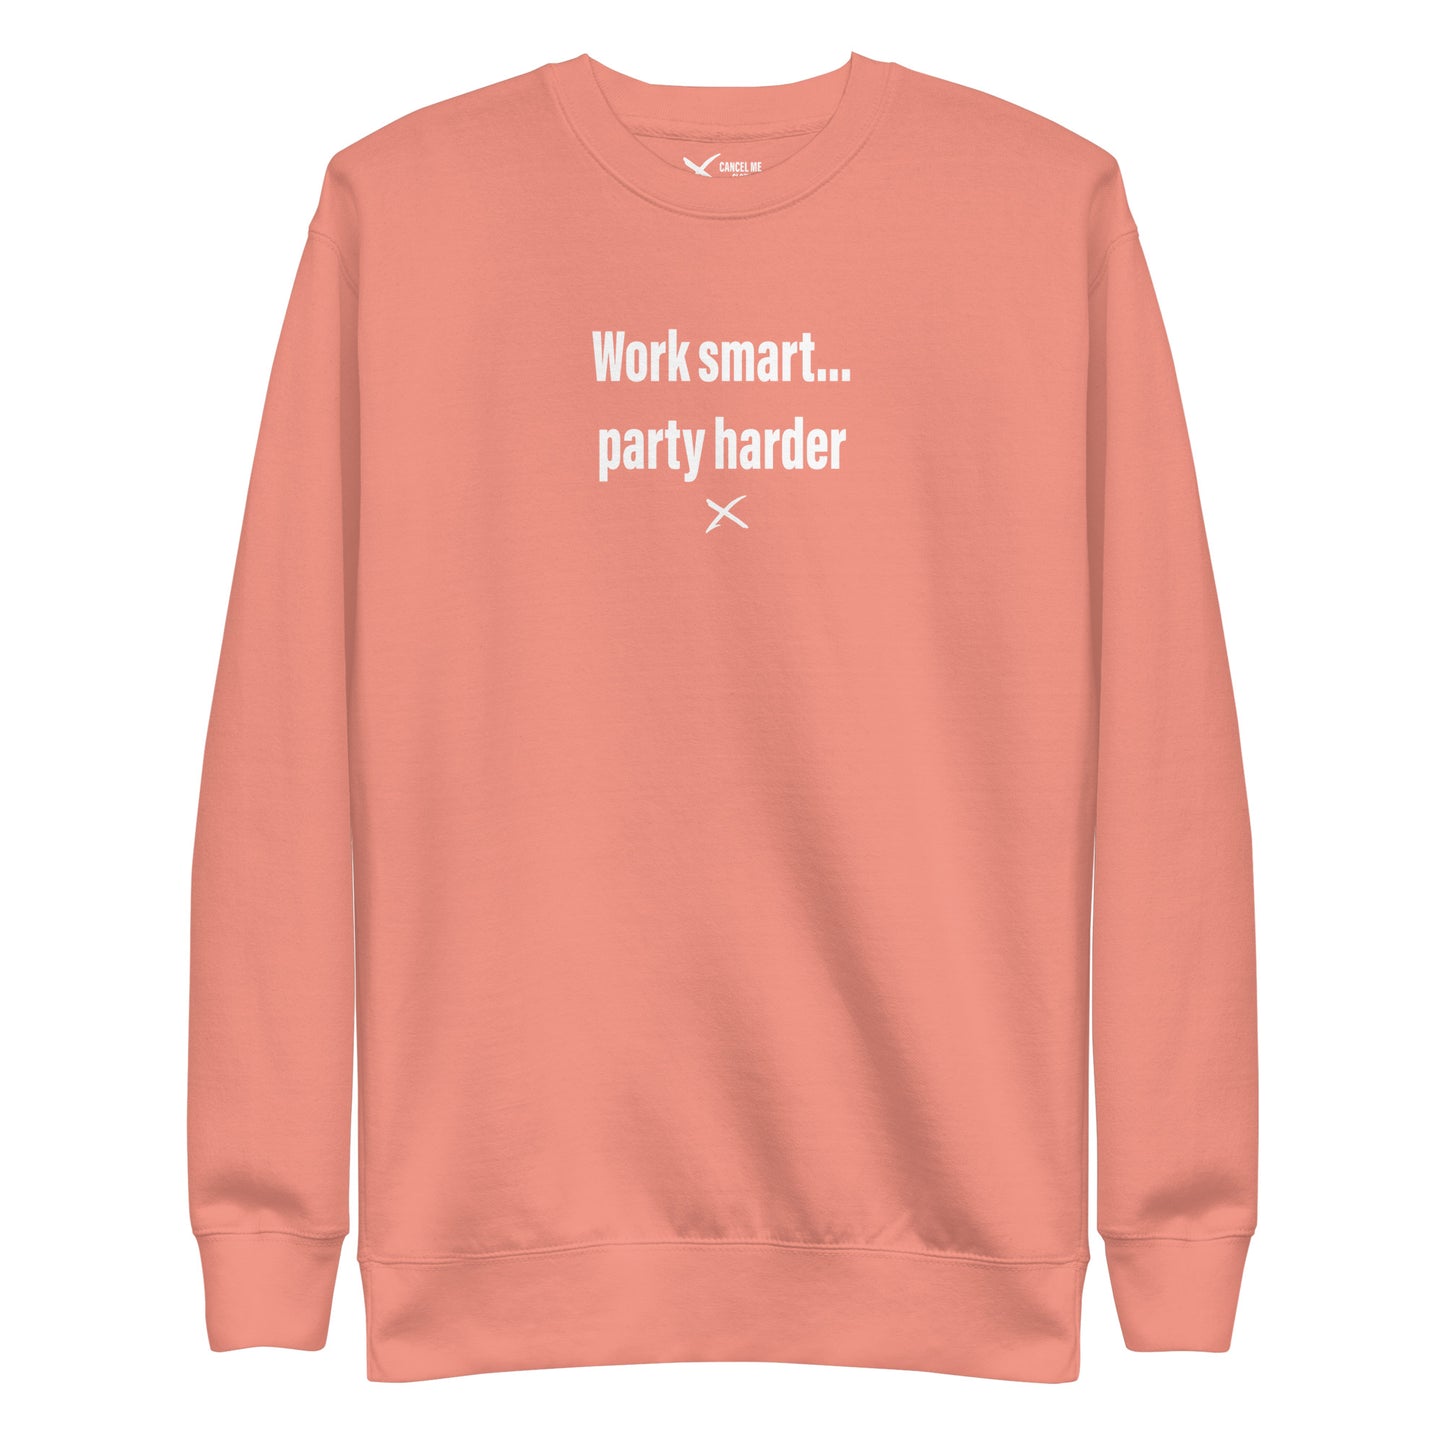 Work smart... party harder - Sweatshirt